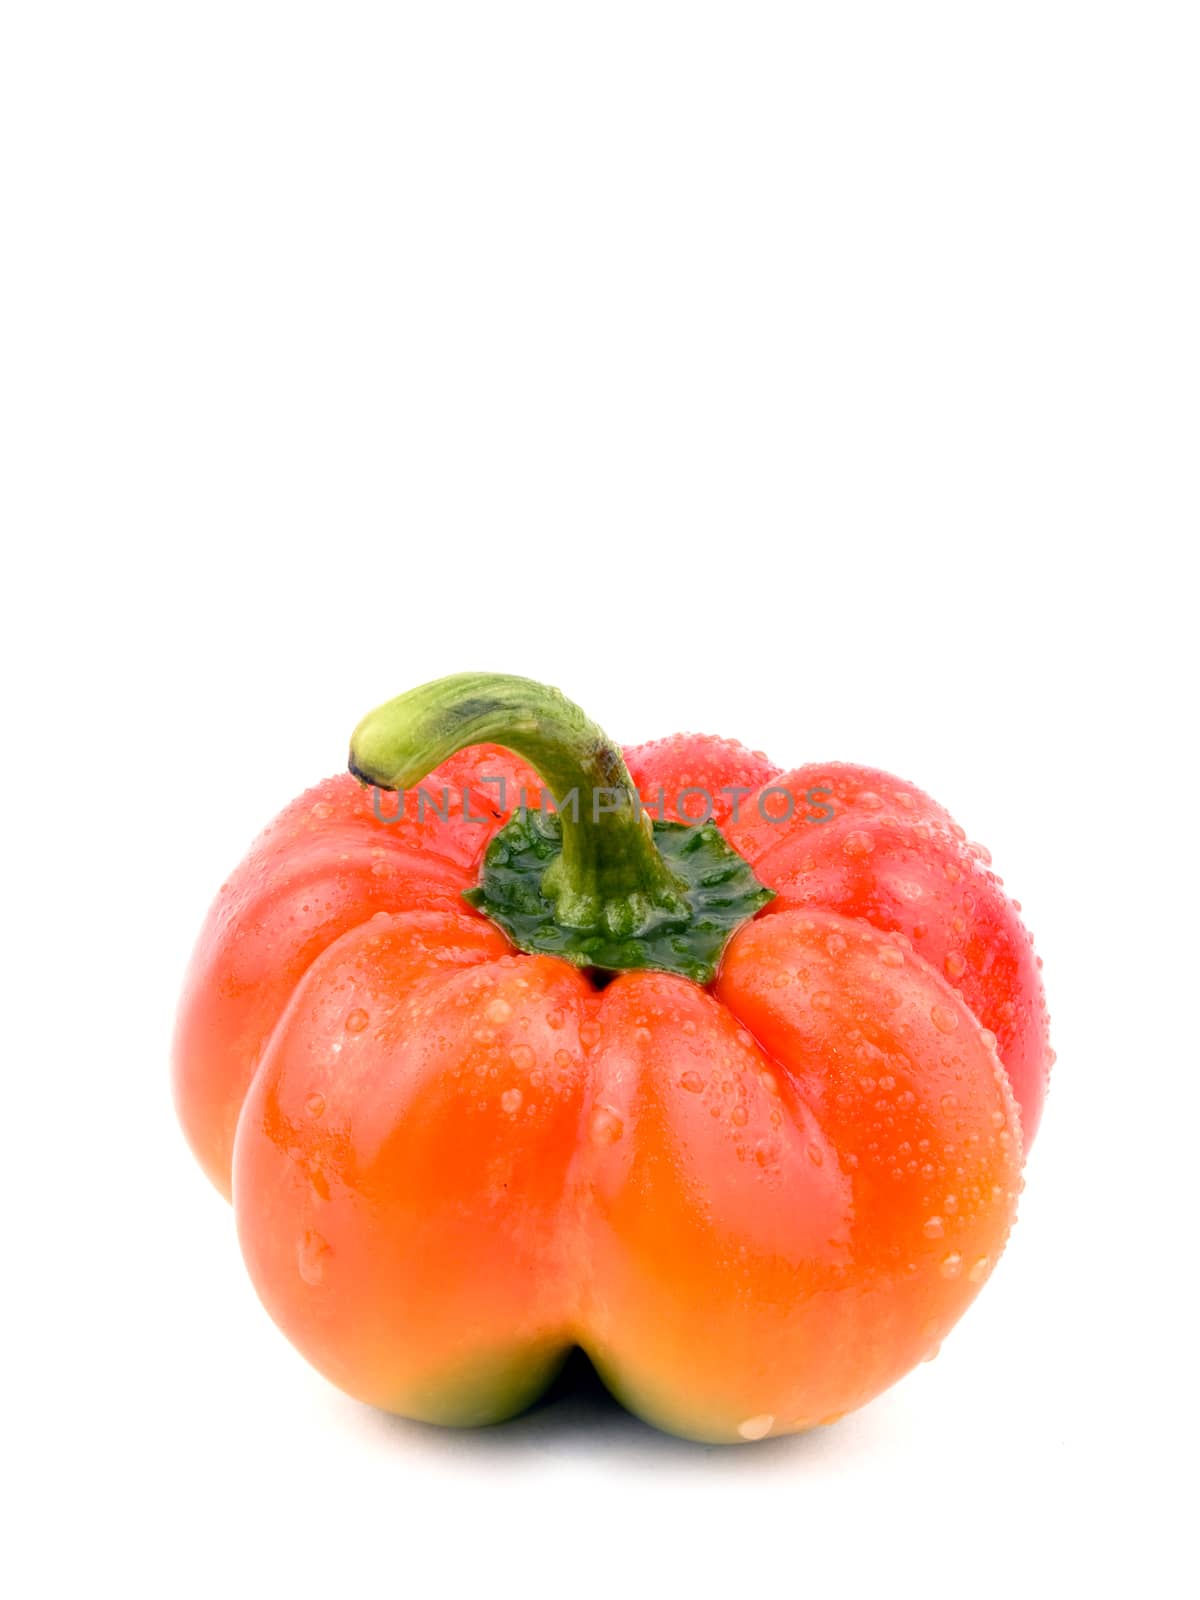 Tasty red paprika on white background